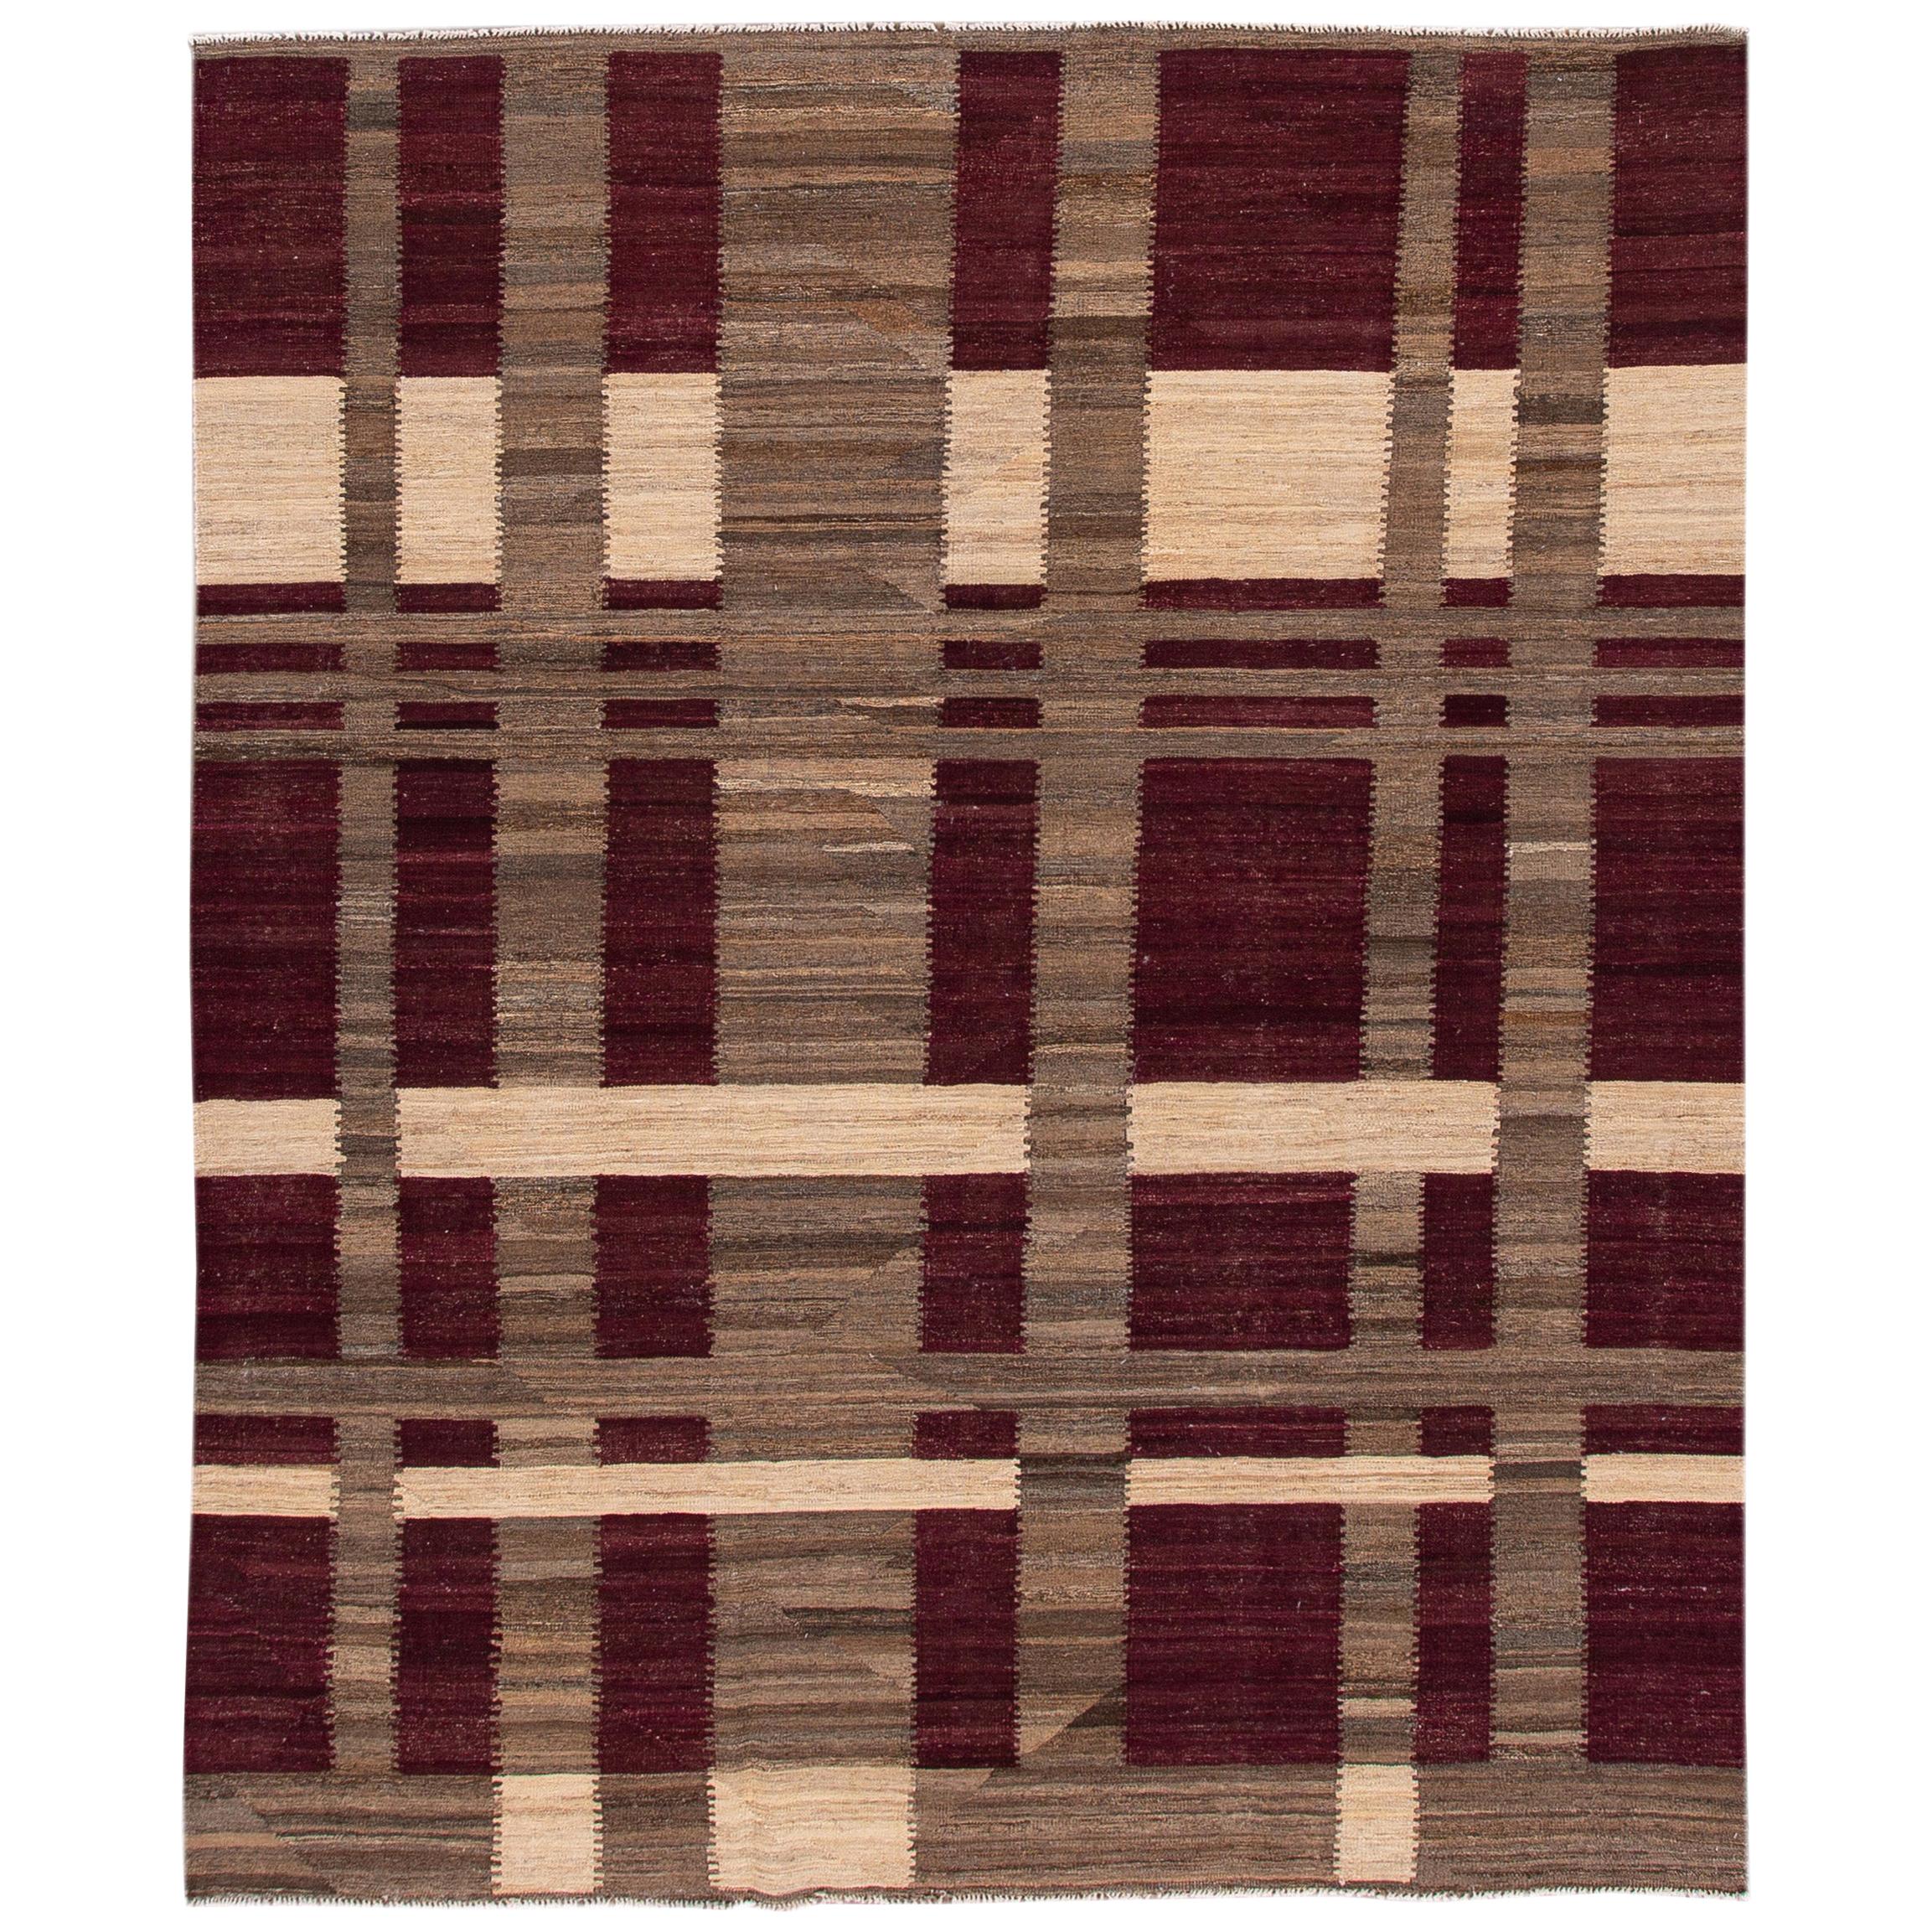 The Moderns Rug & Kilim Brown Geometric Wool Rug